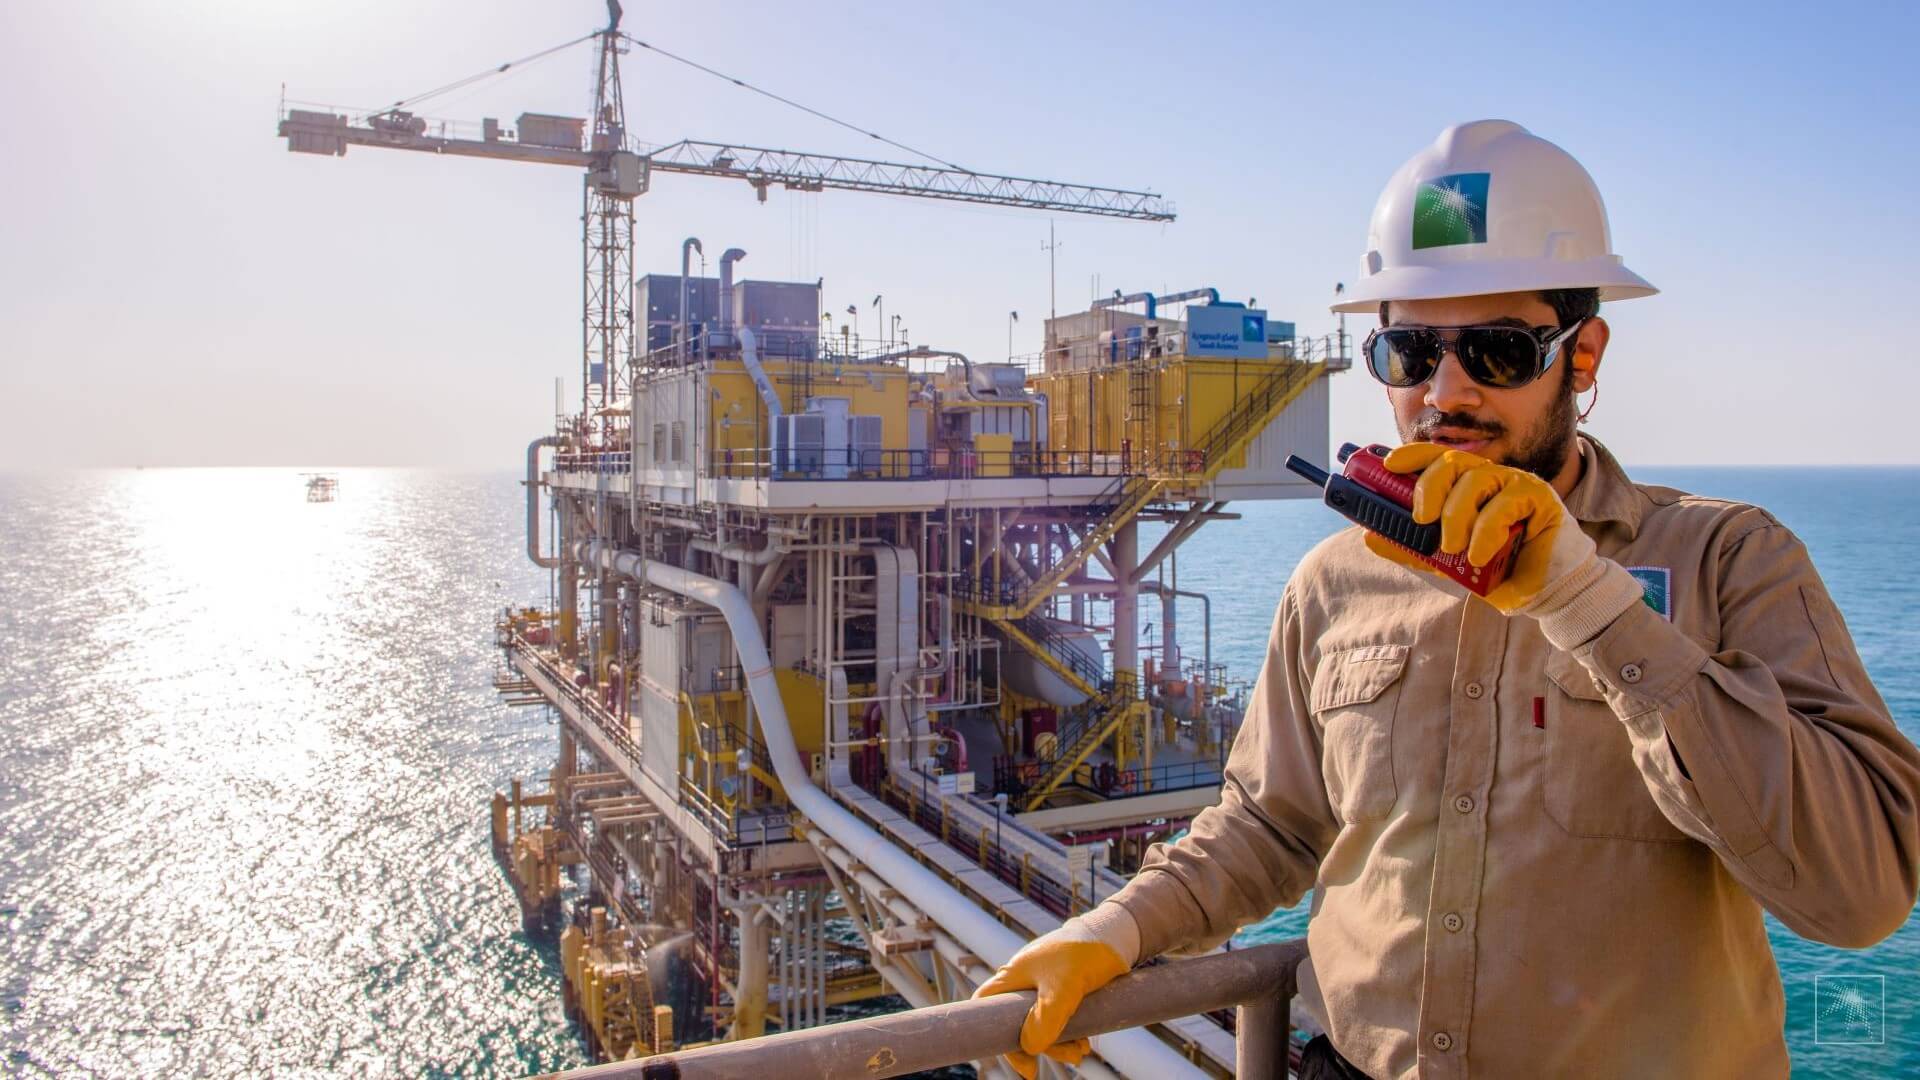 Engineer onboard offshore oil platform 